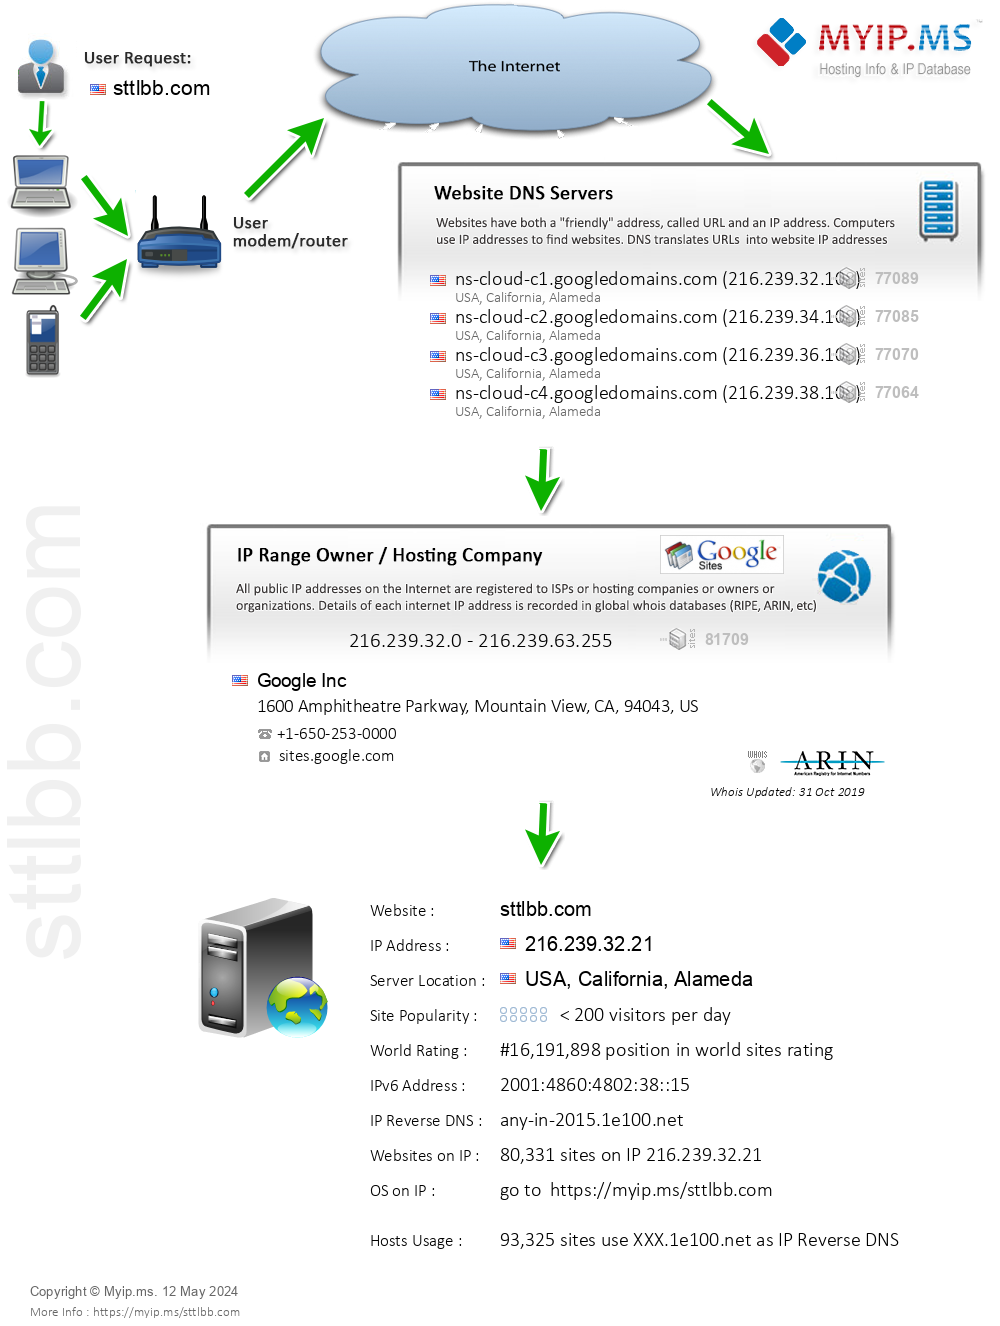 Sttlbb.com - Website Hosting Visual IP Diagram